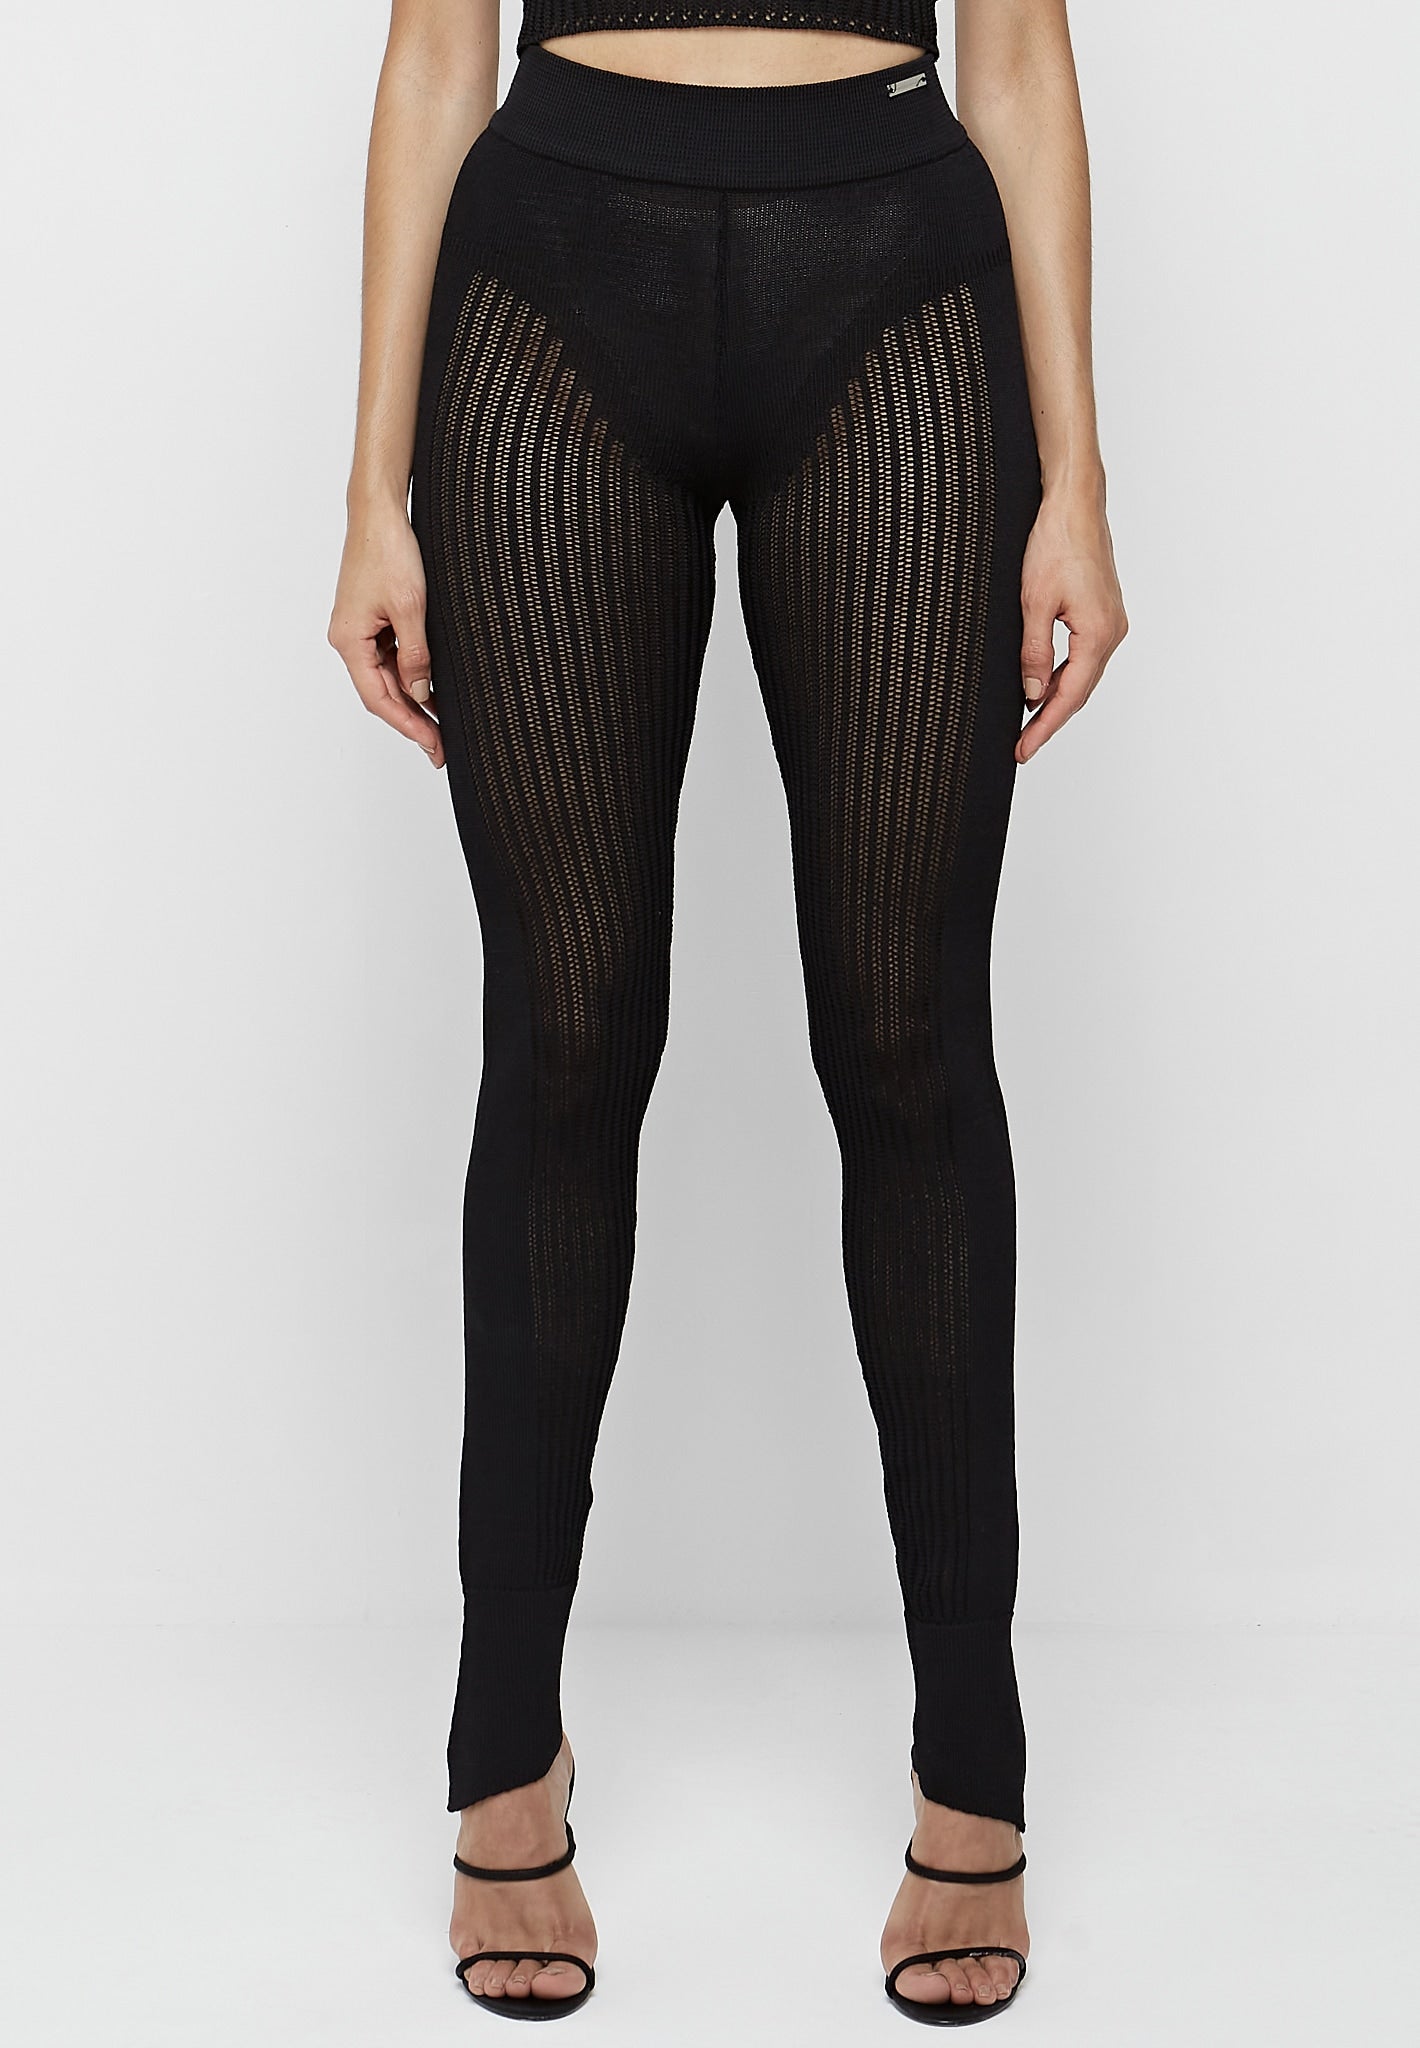 Damen Sexy Transparent Leggings Sheer Mesh Leggins Hose Lang Pants Hosen  Dessous | eBay